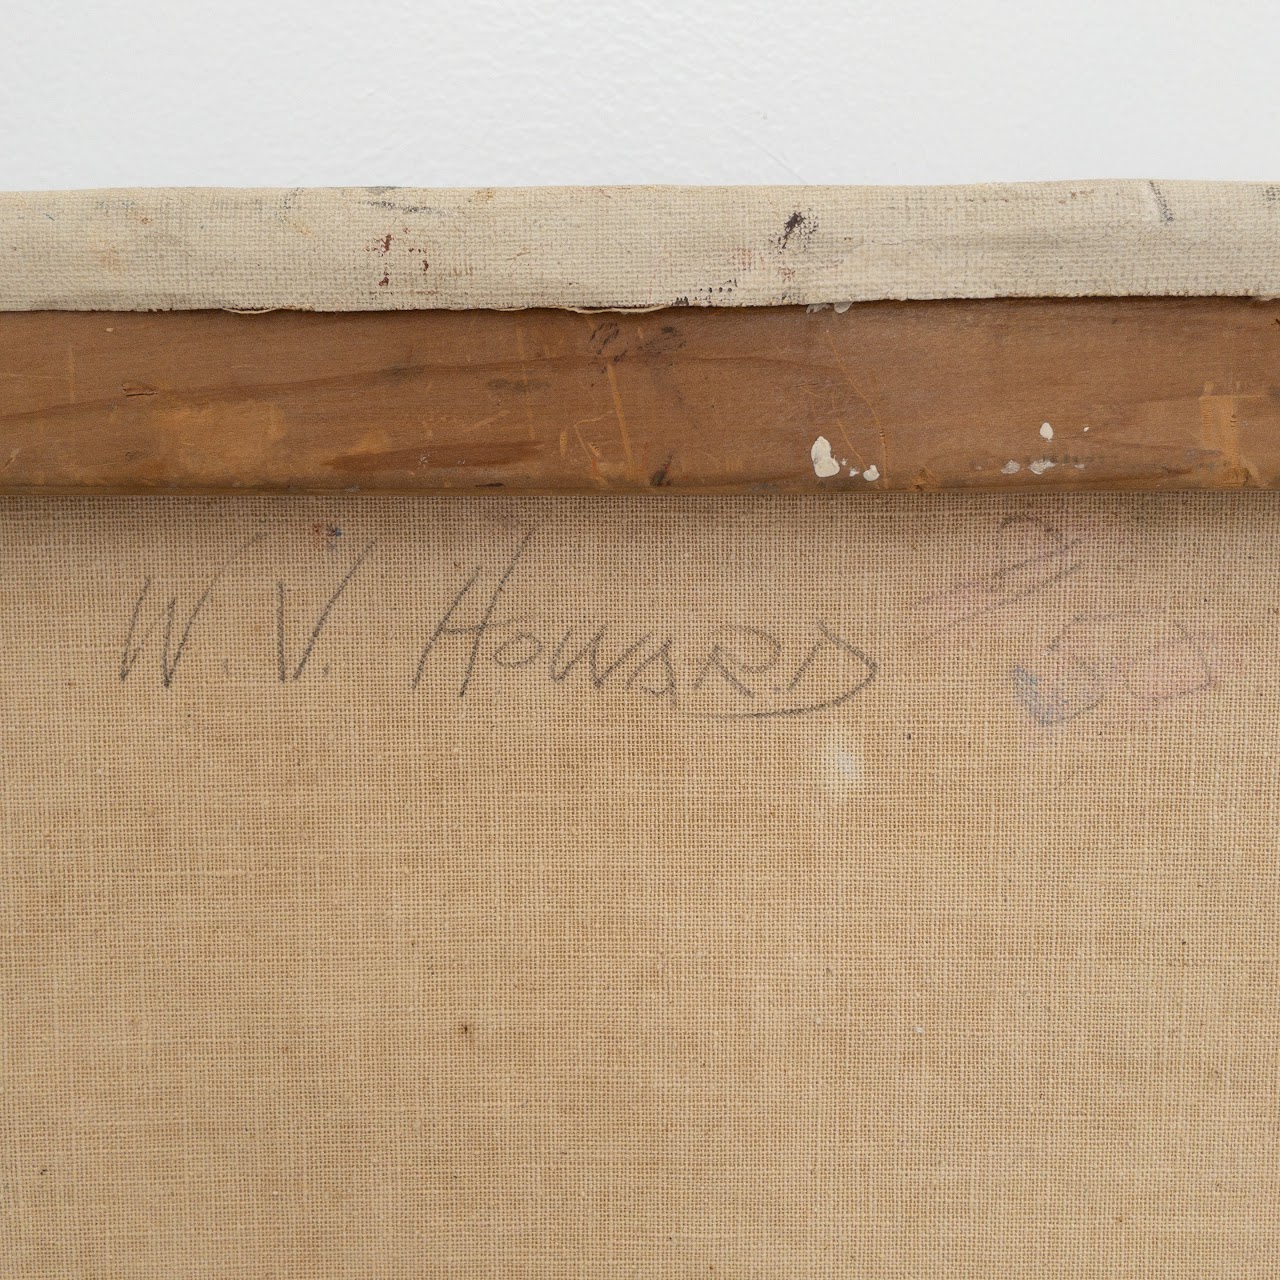 W.V. Howard Signed Mid-Century Modernist Still Life Oil Painting